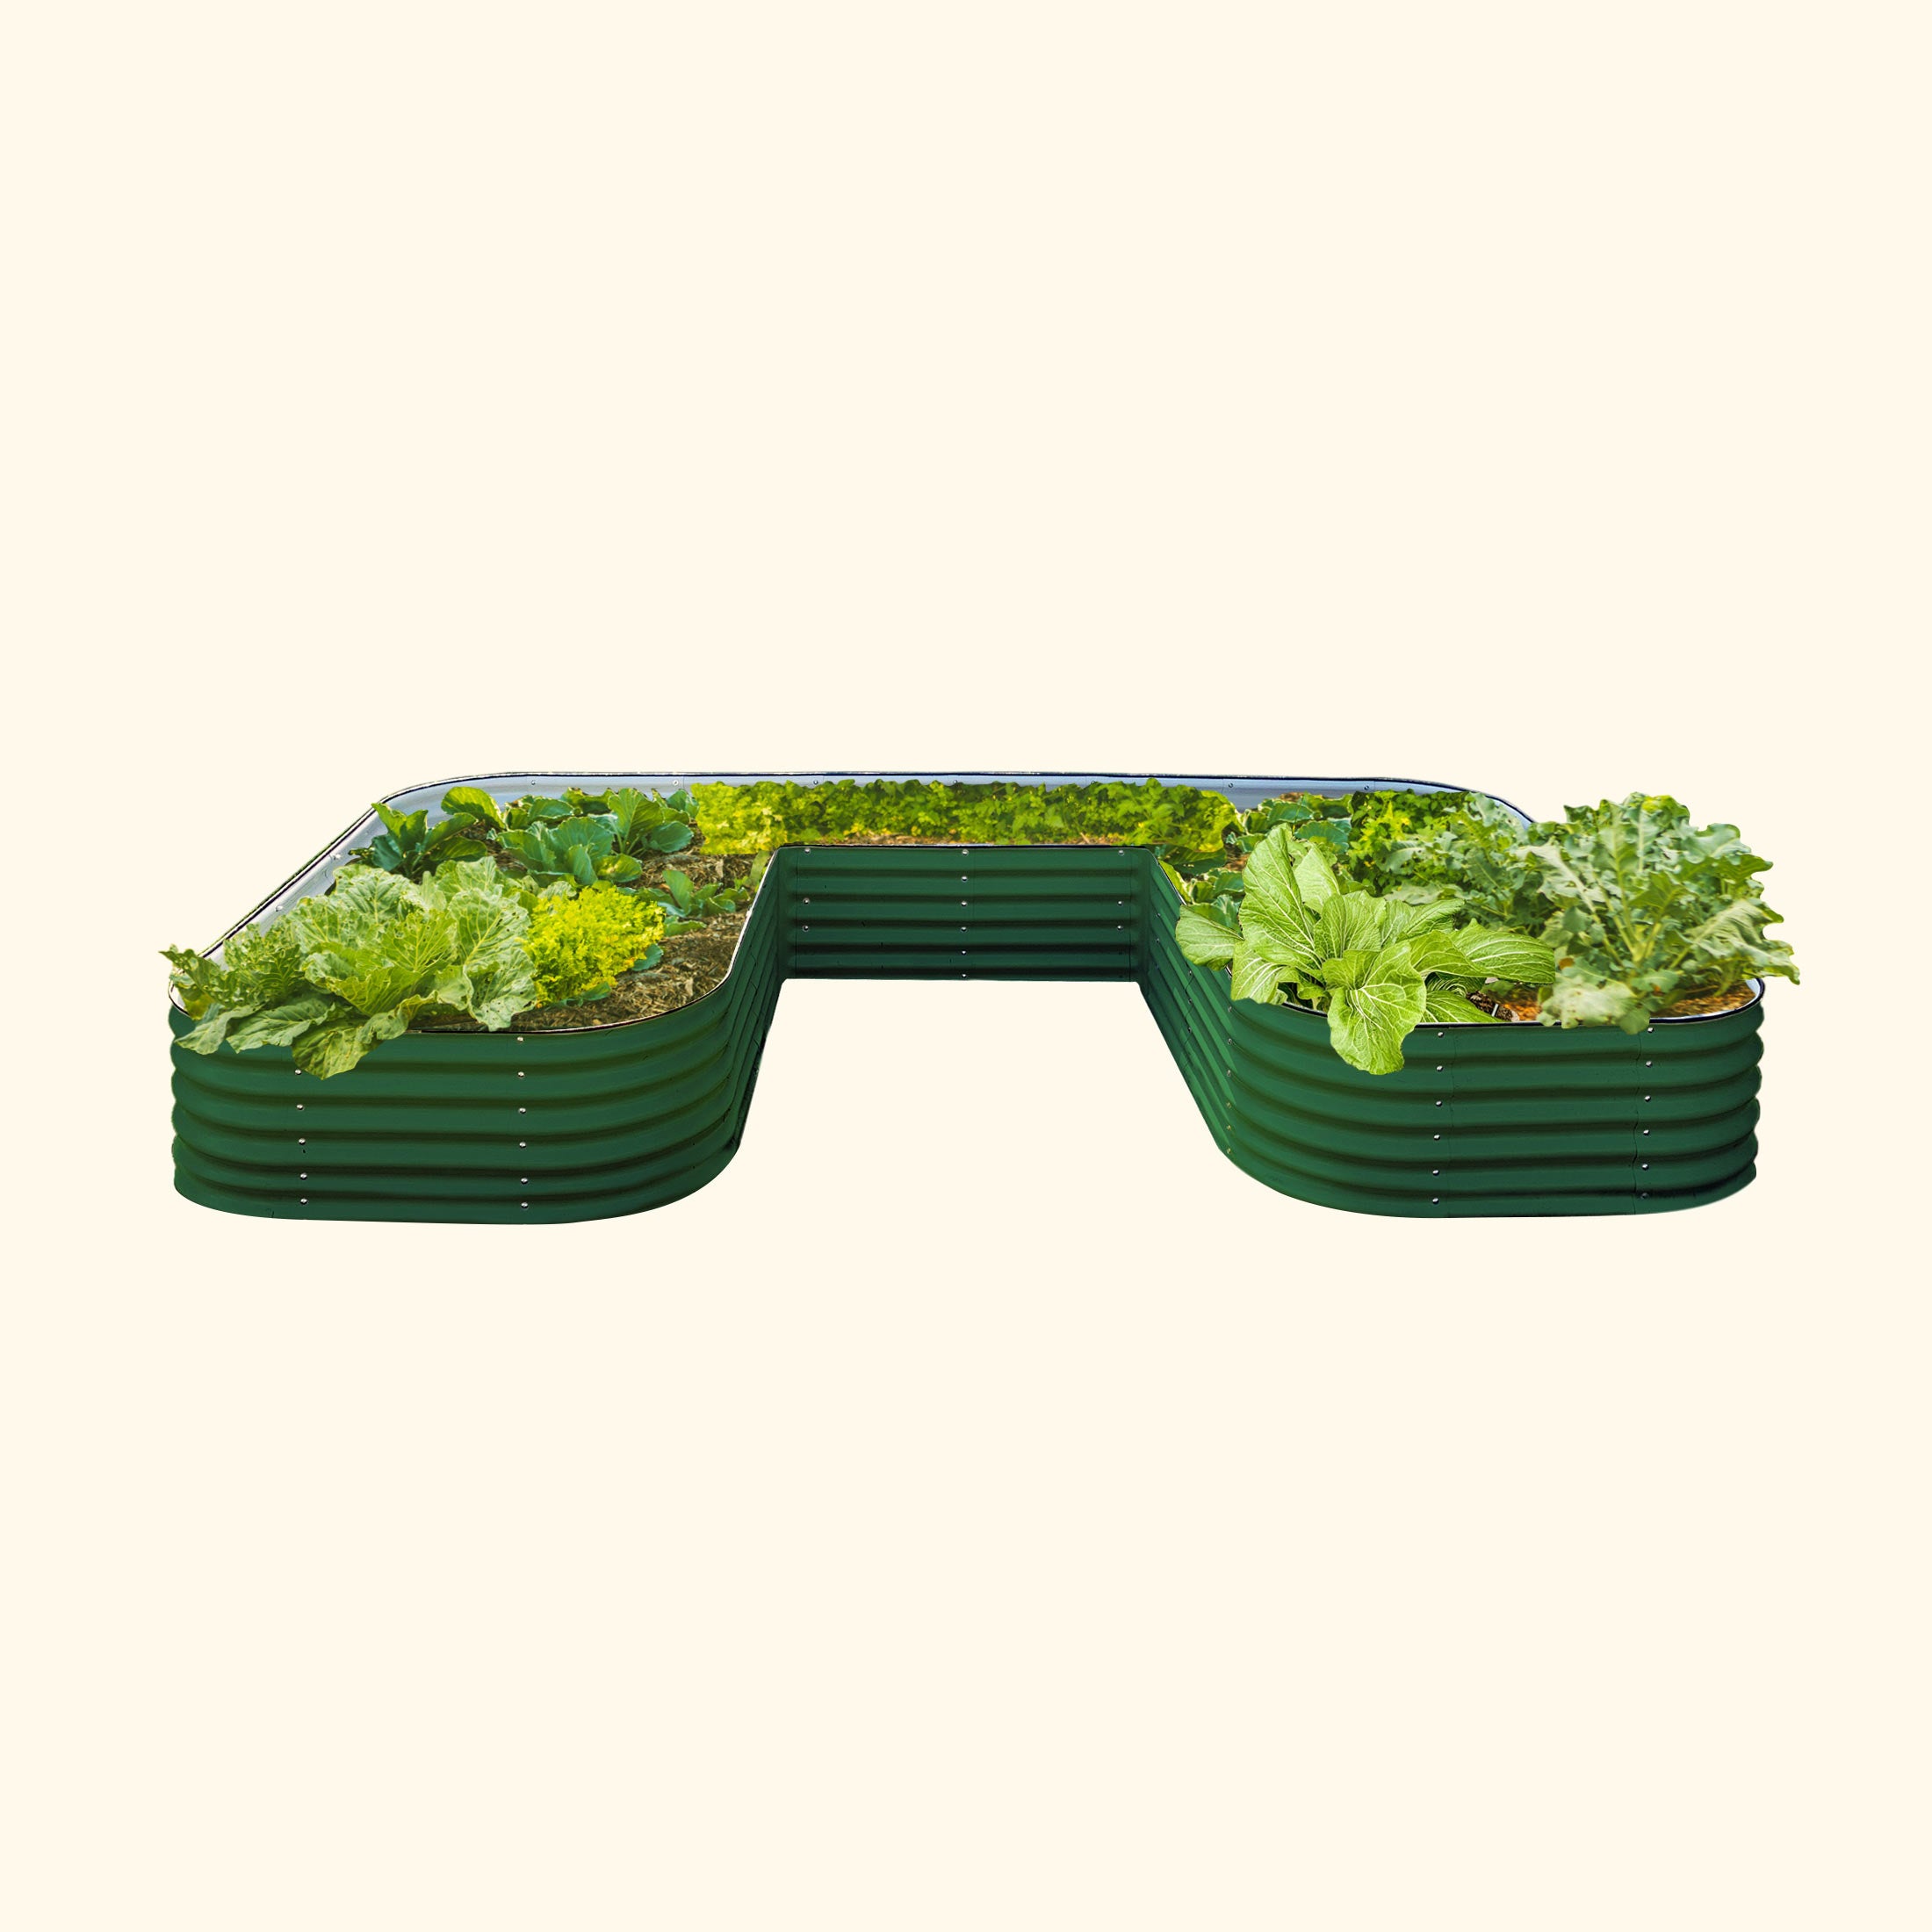 17 tall U-shaped metal garden container - Jumbo Size | British Green | Vego Garden raised garden bed